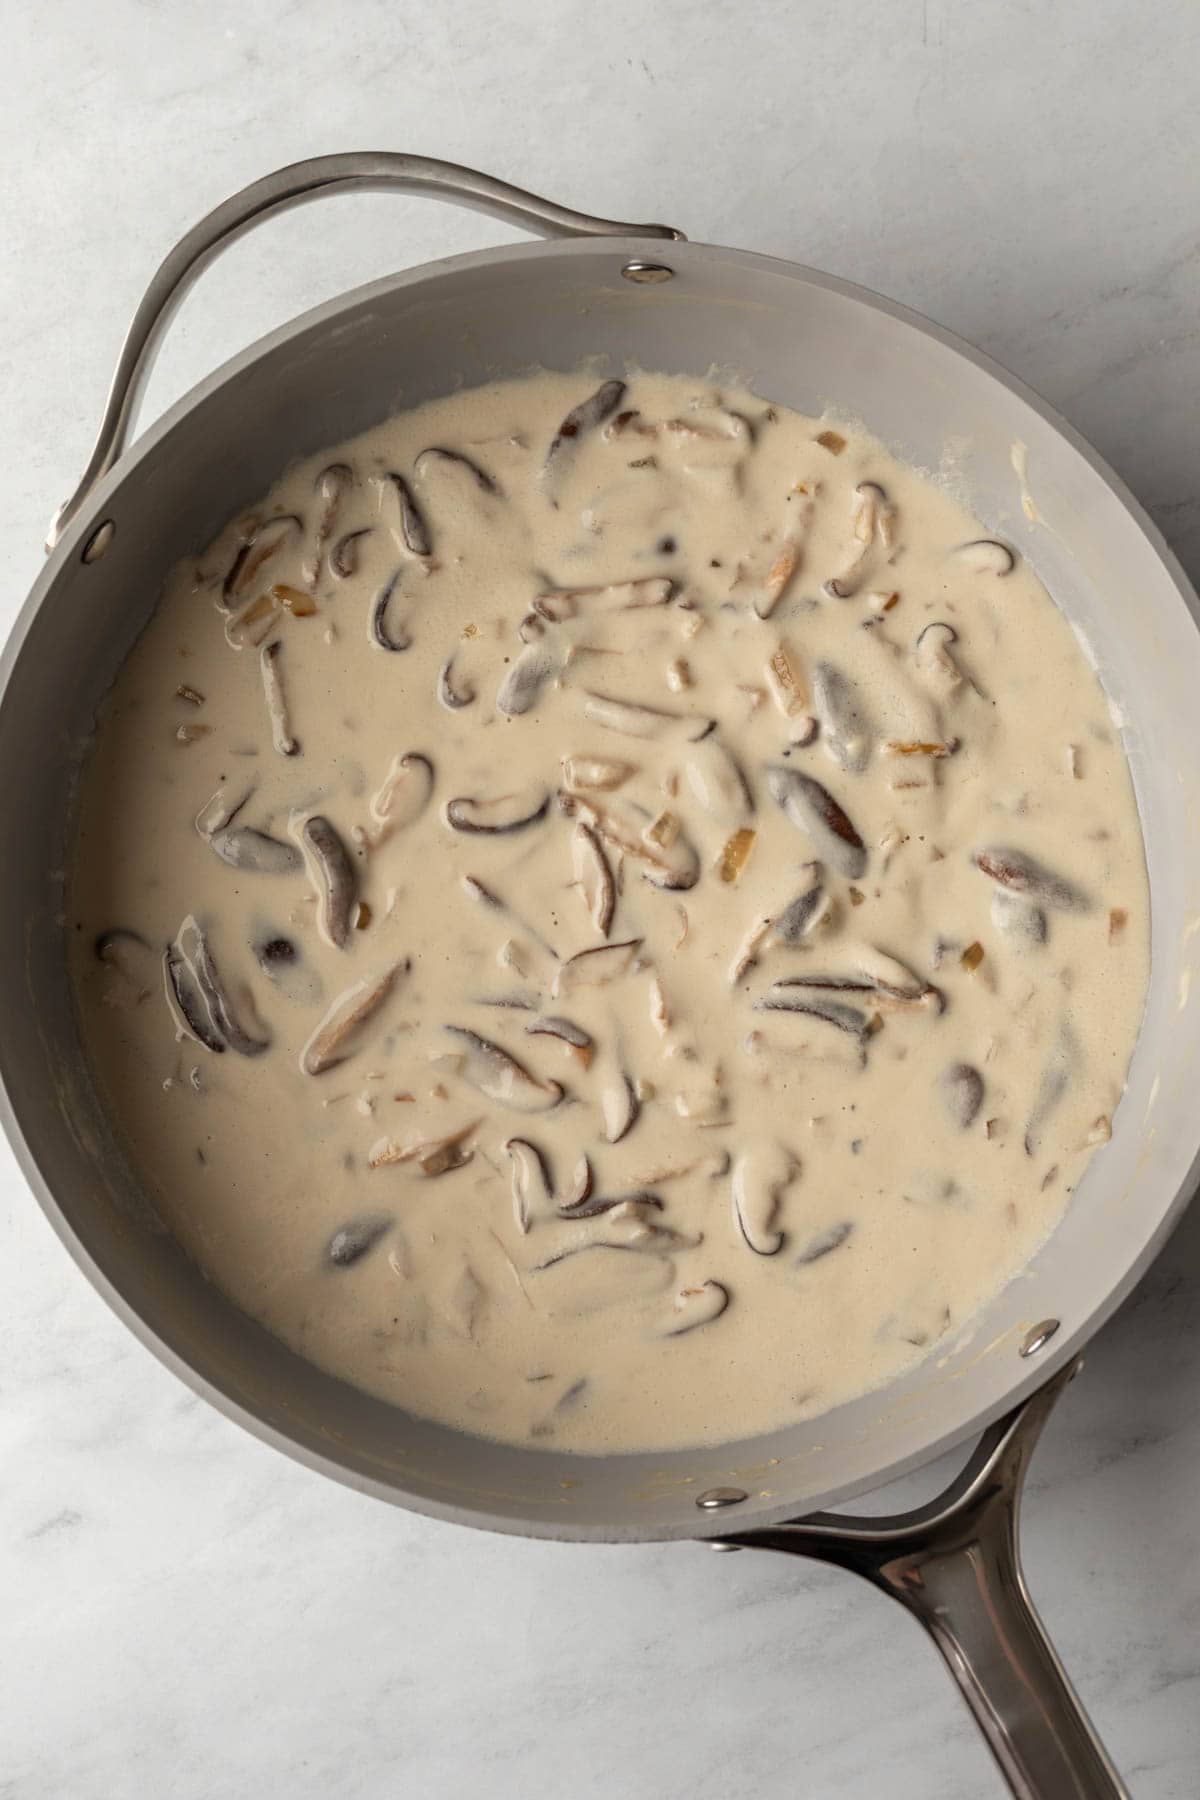 sunflower seed cream sauce and shiitake mushrooms in a sauté pan.